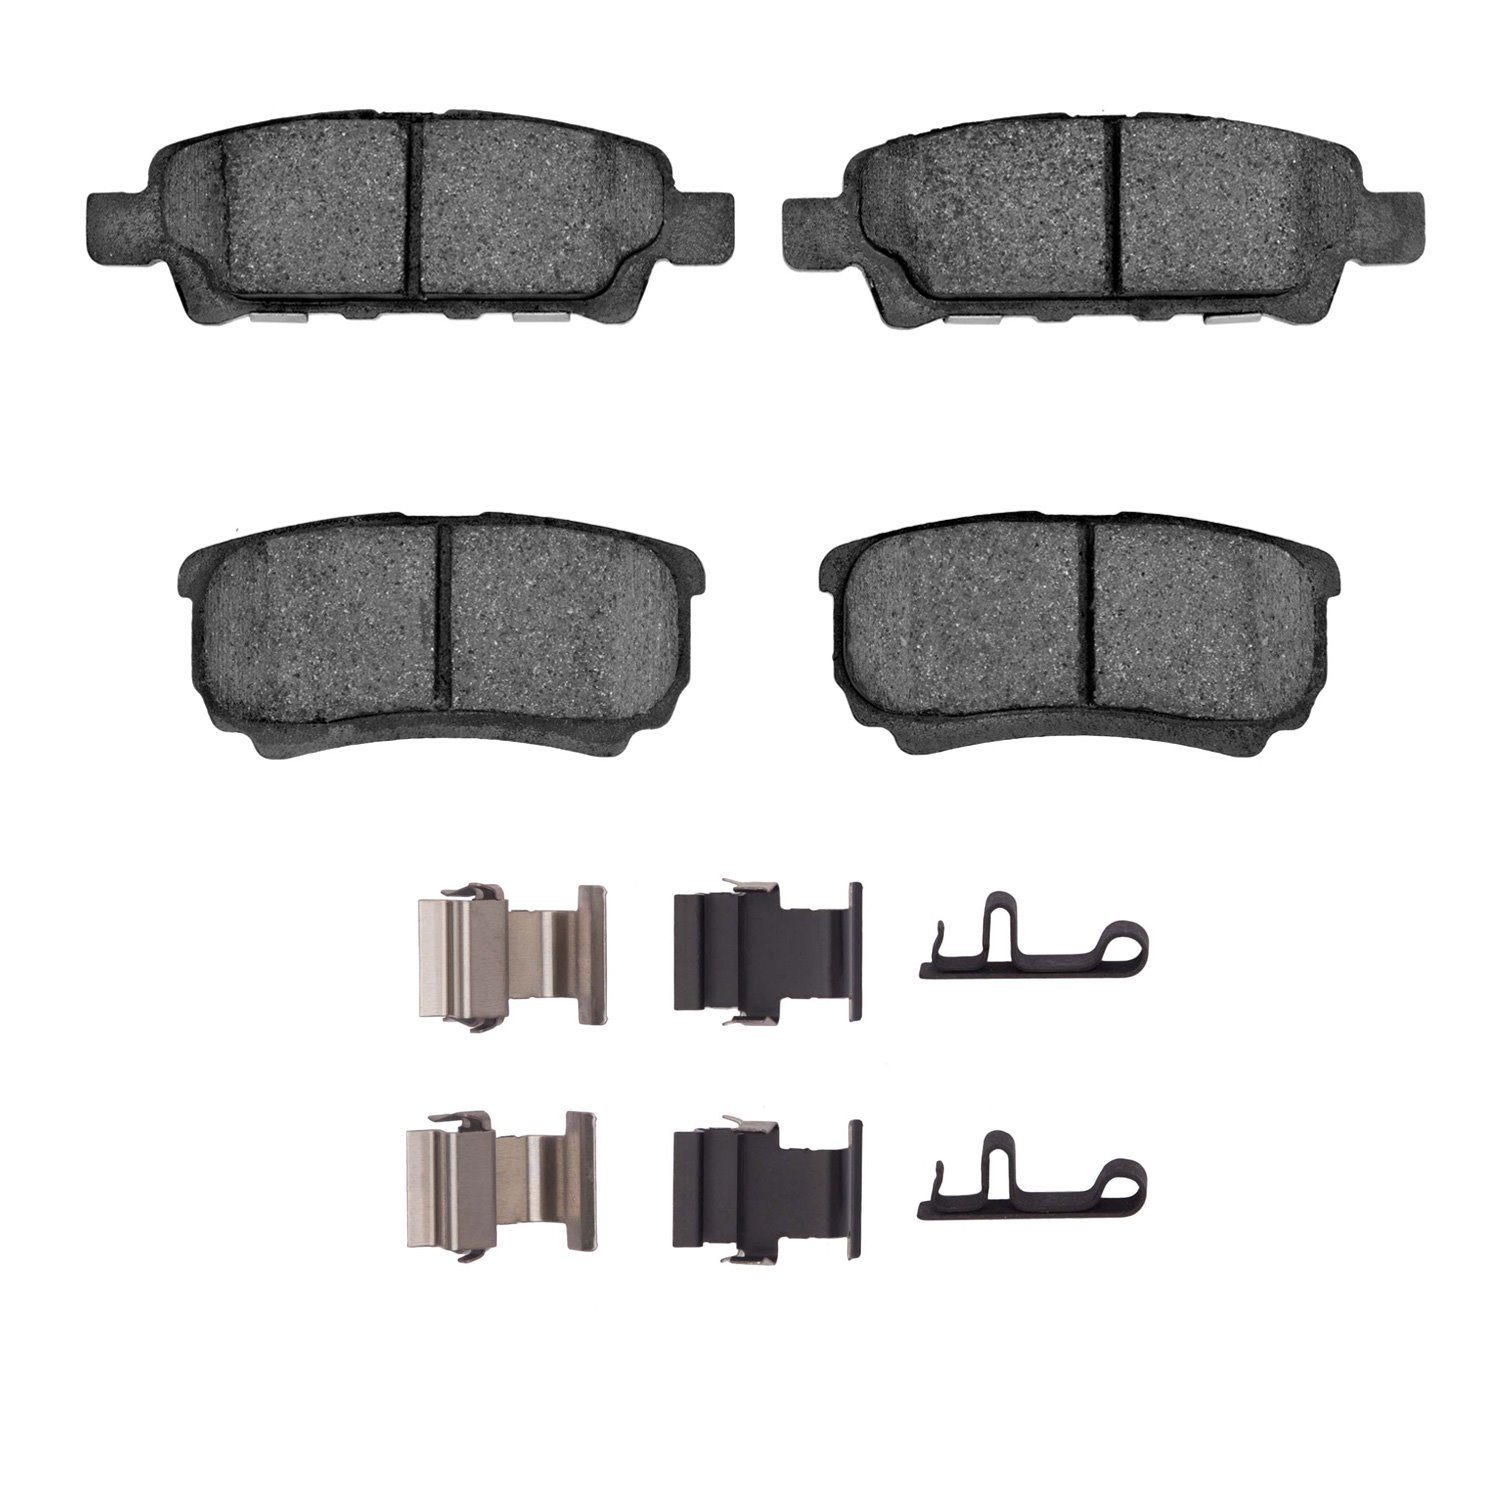 1310-1037-01 3000-Series Ceramic Brake Pads & Hardware Kit, 2004-2017 Multiple Makes/Models, Position: Rear